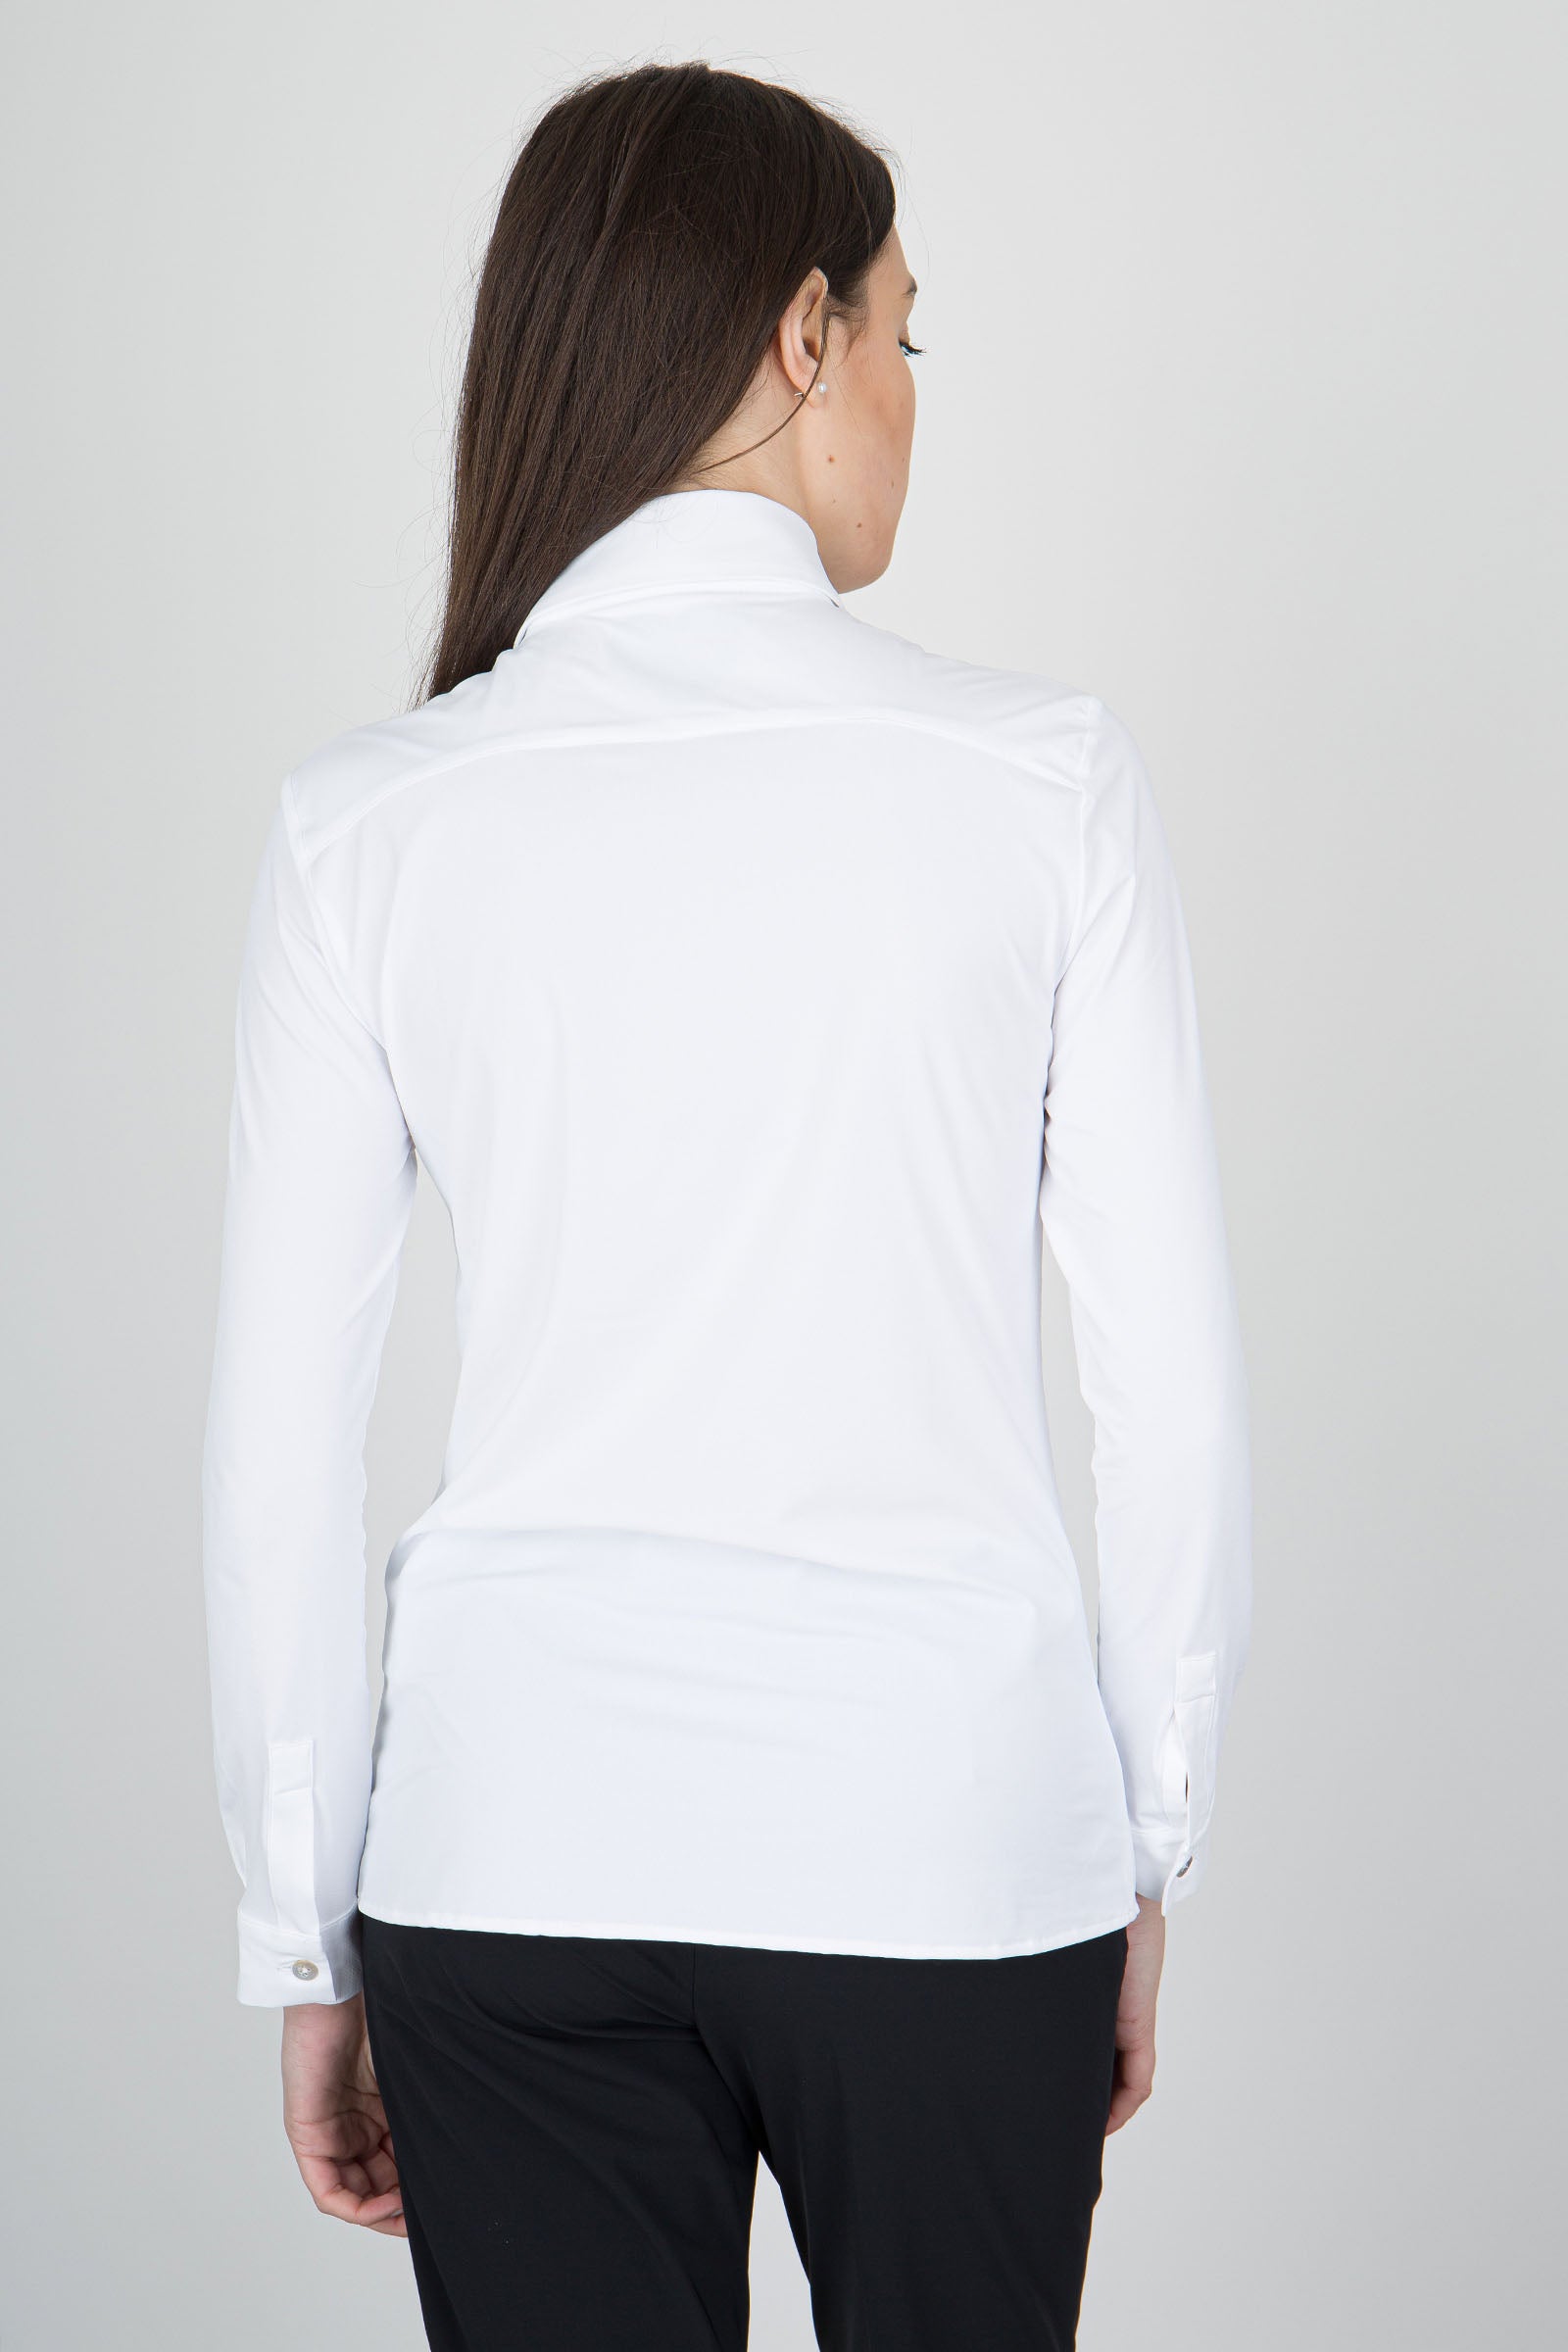 Shirty Oxford Plain Woman Shirt - 4